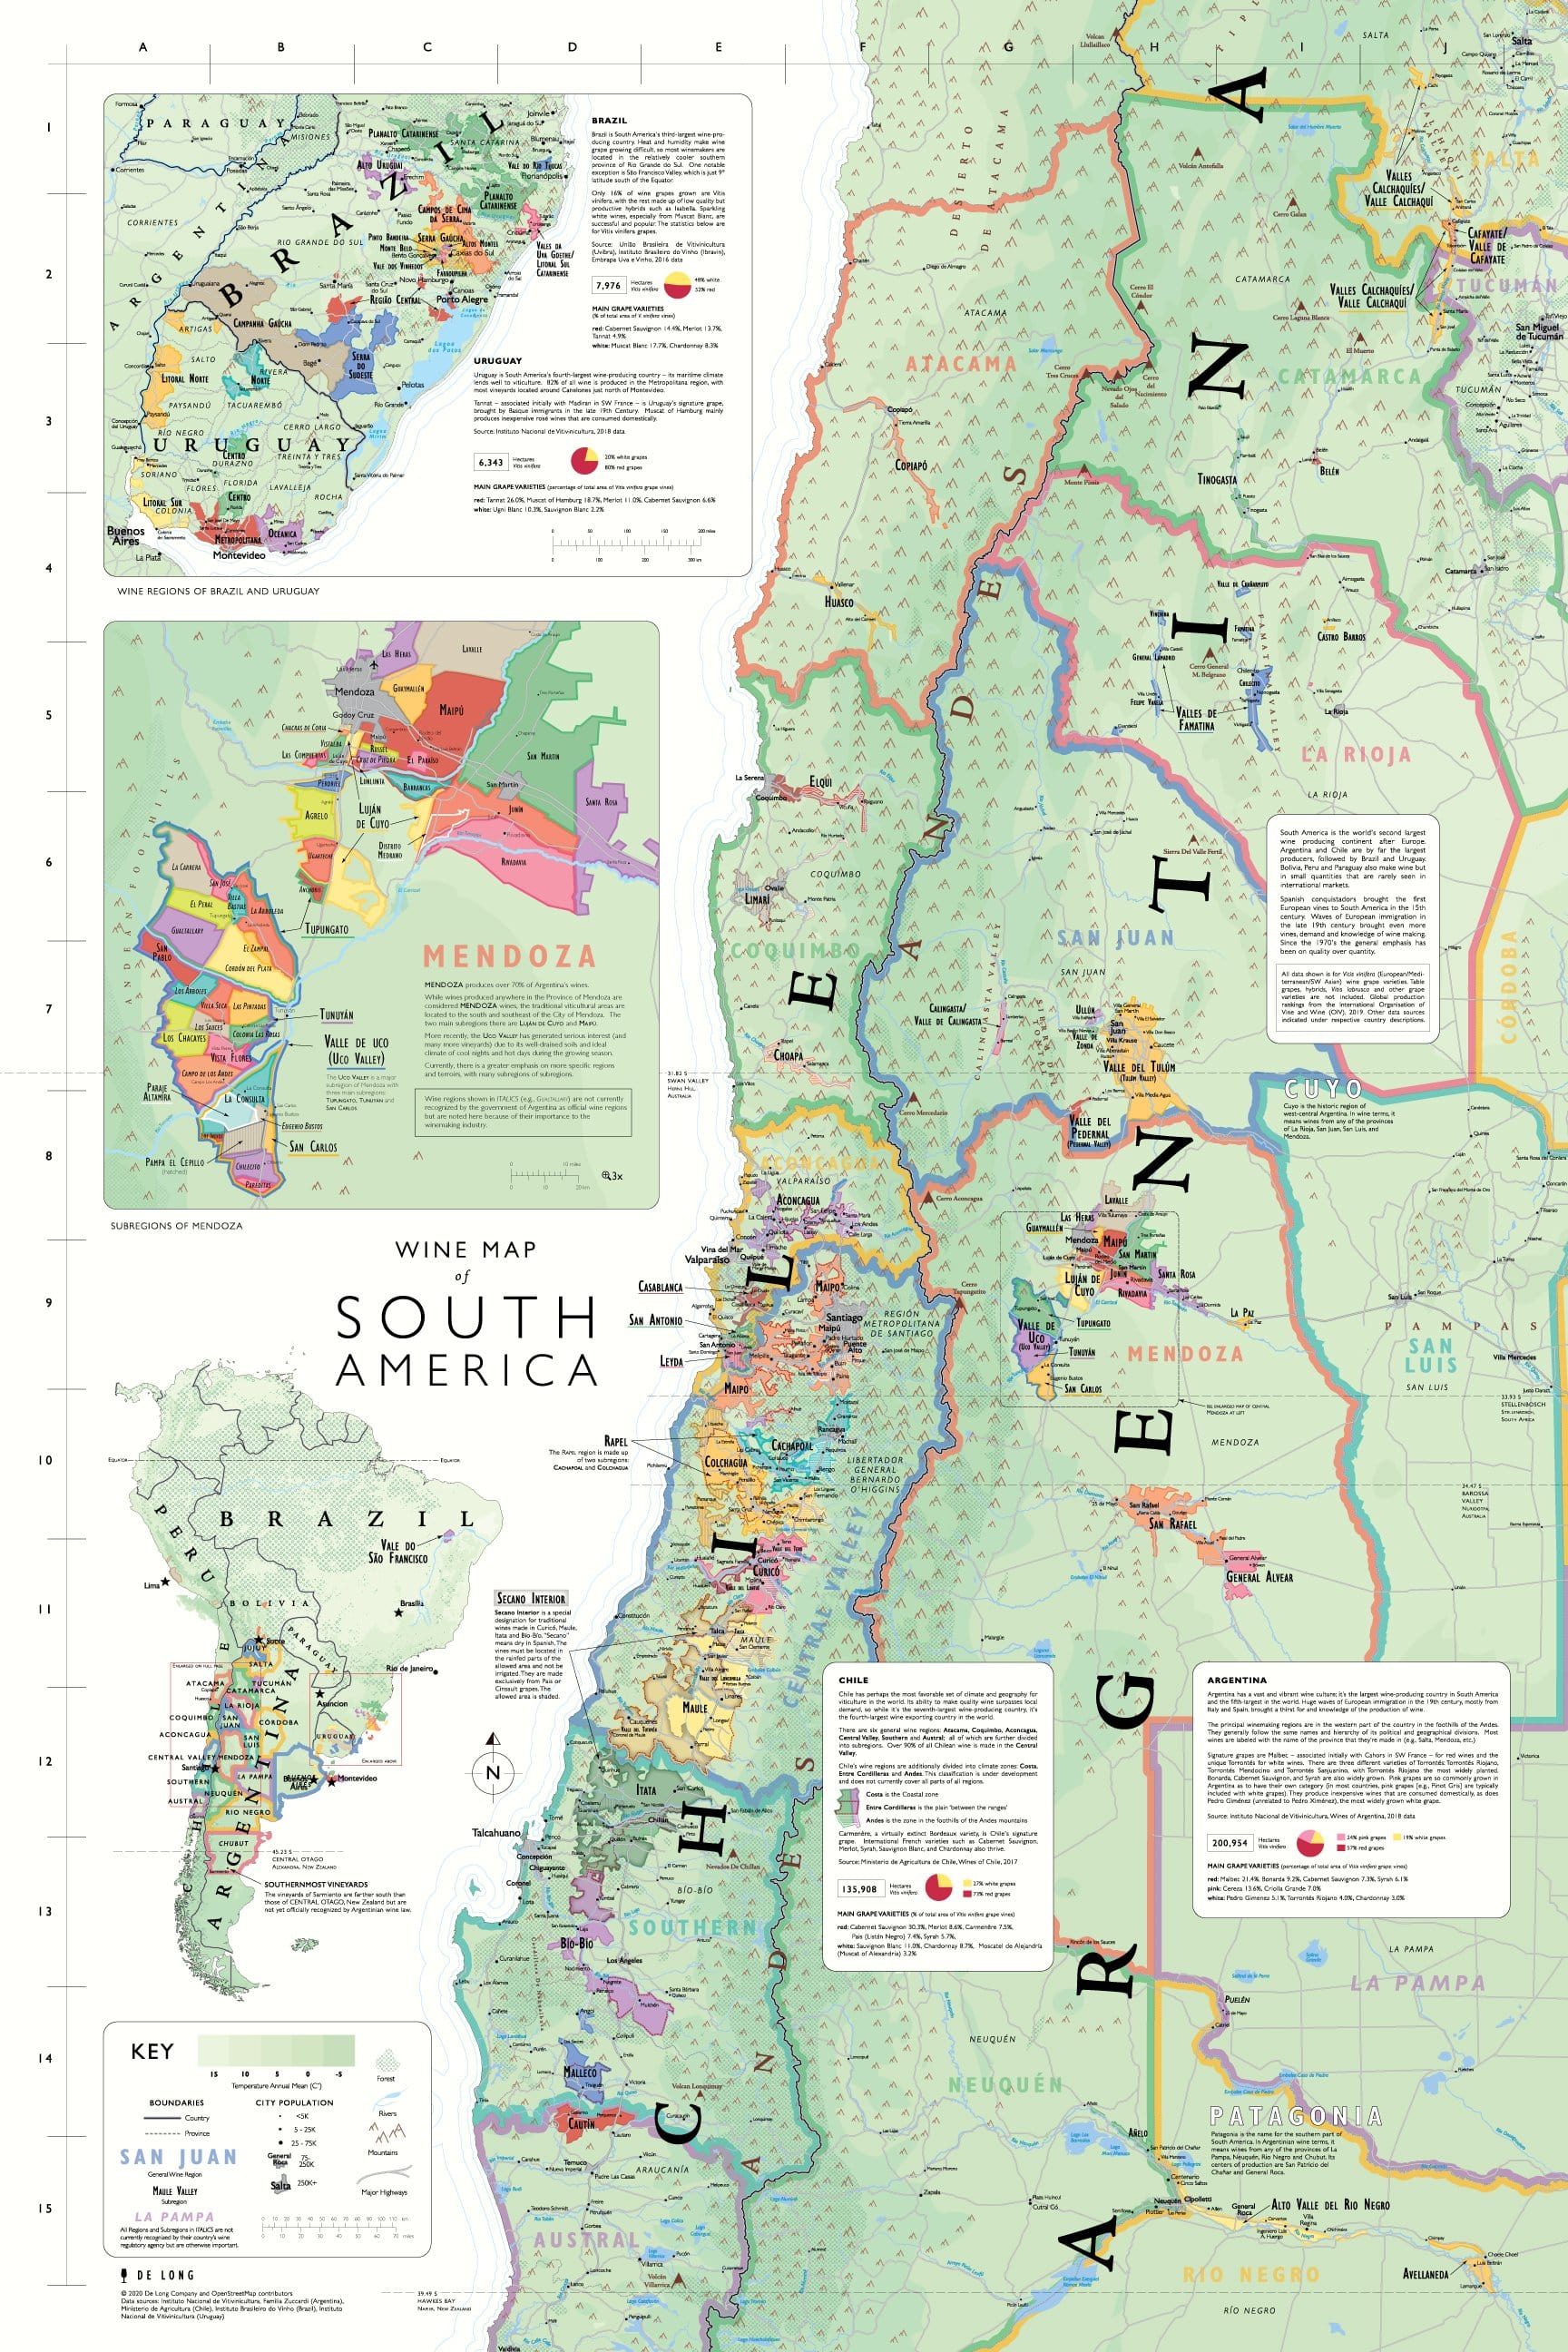 Wine Map of South America - De Long